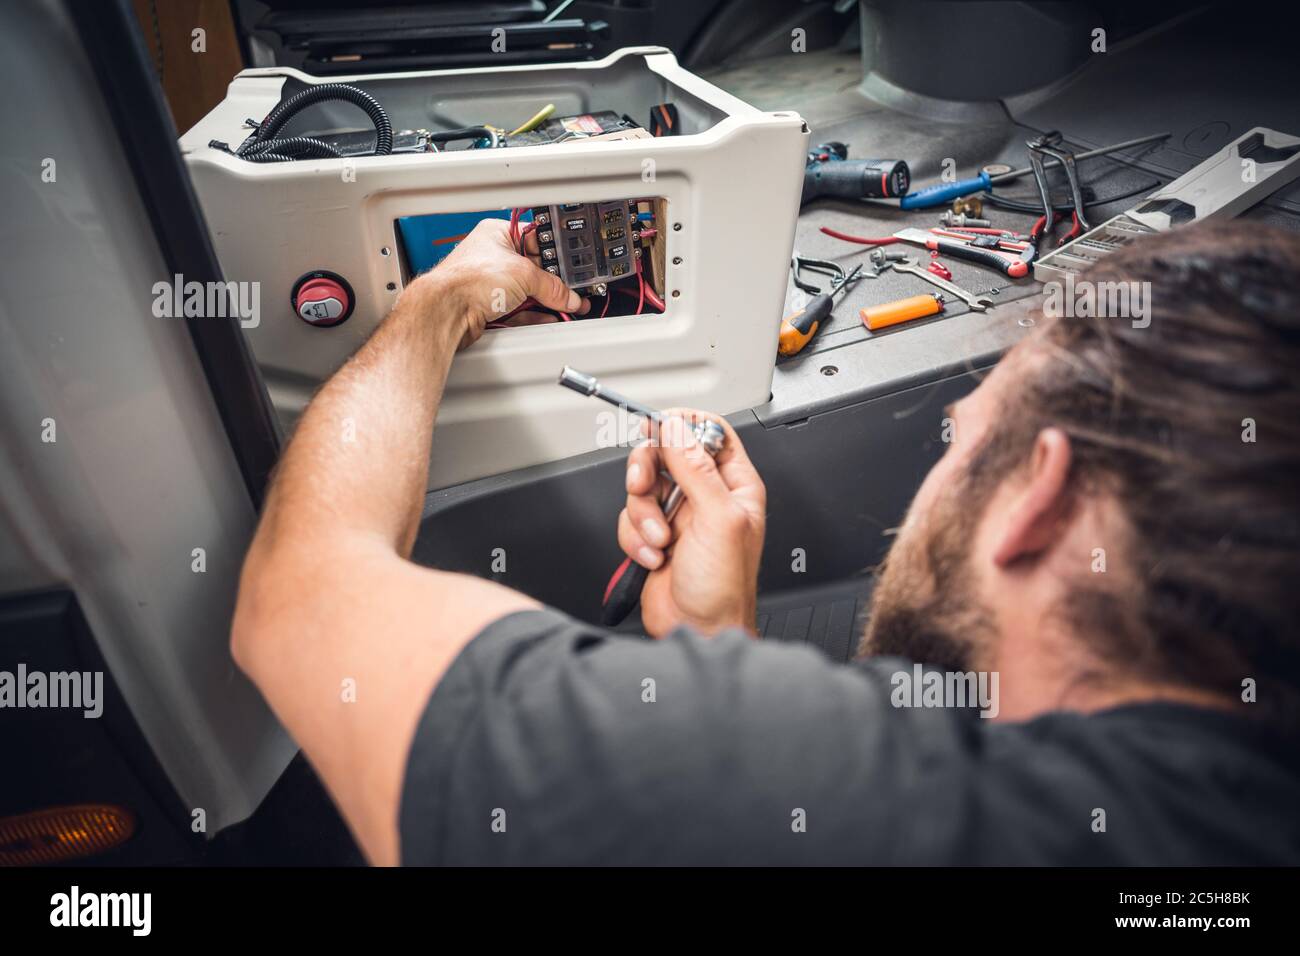 Man installing electrical equipment in his DIY camper van Stock Photo